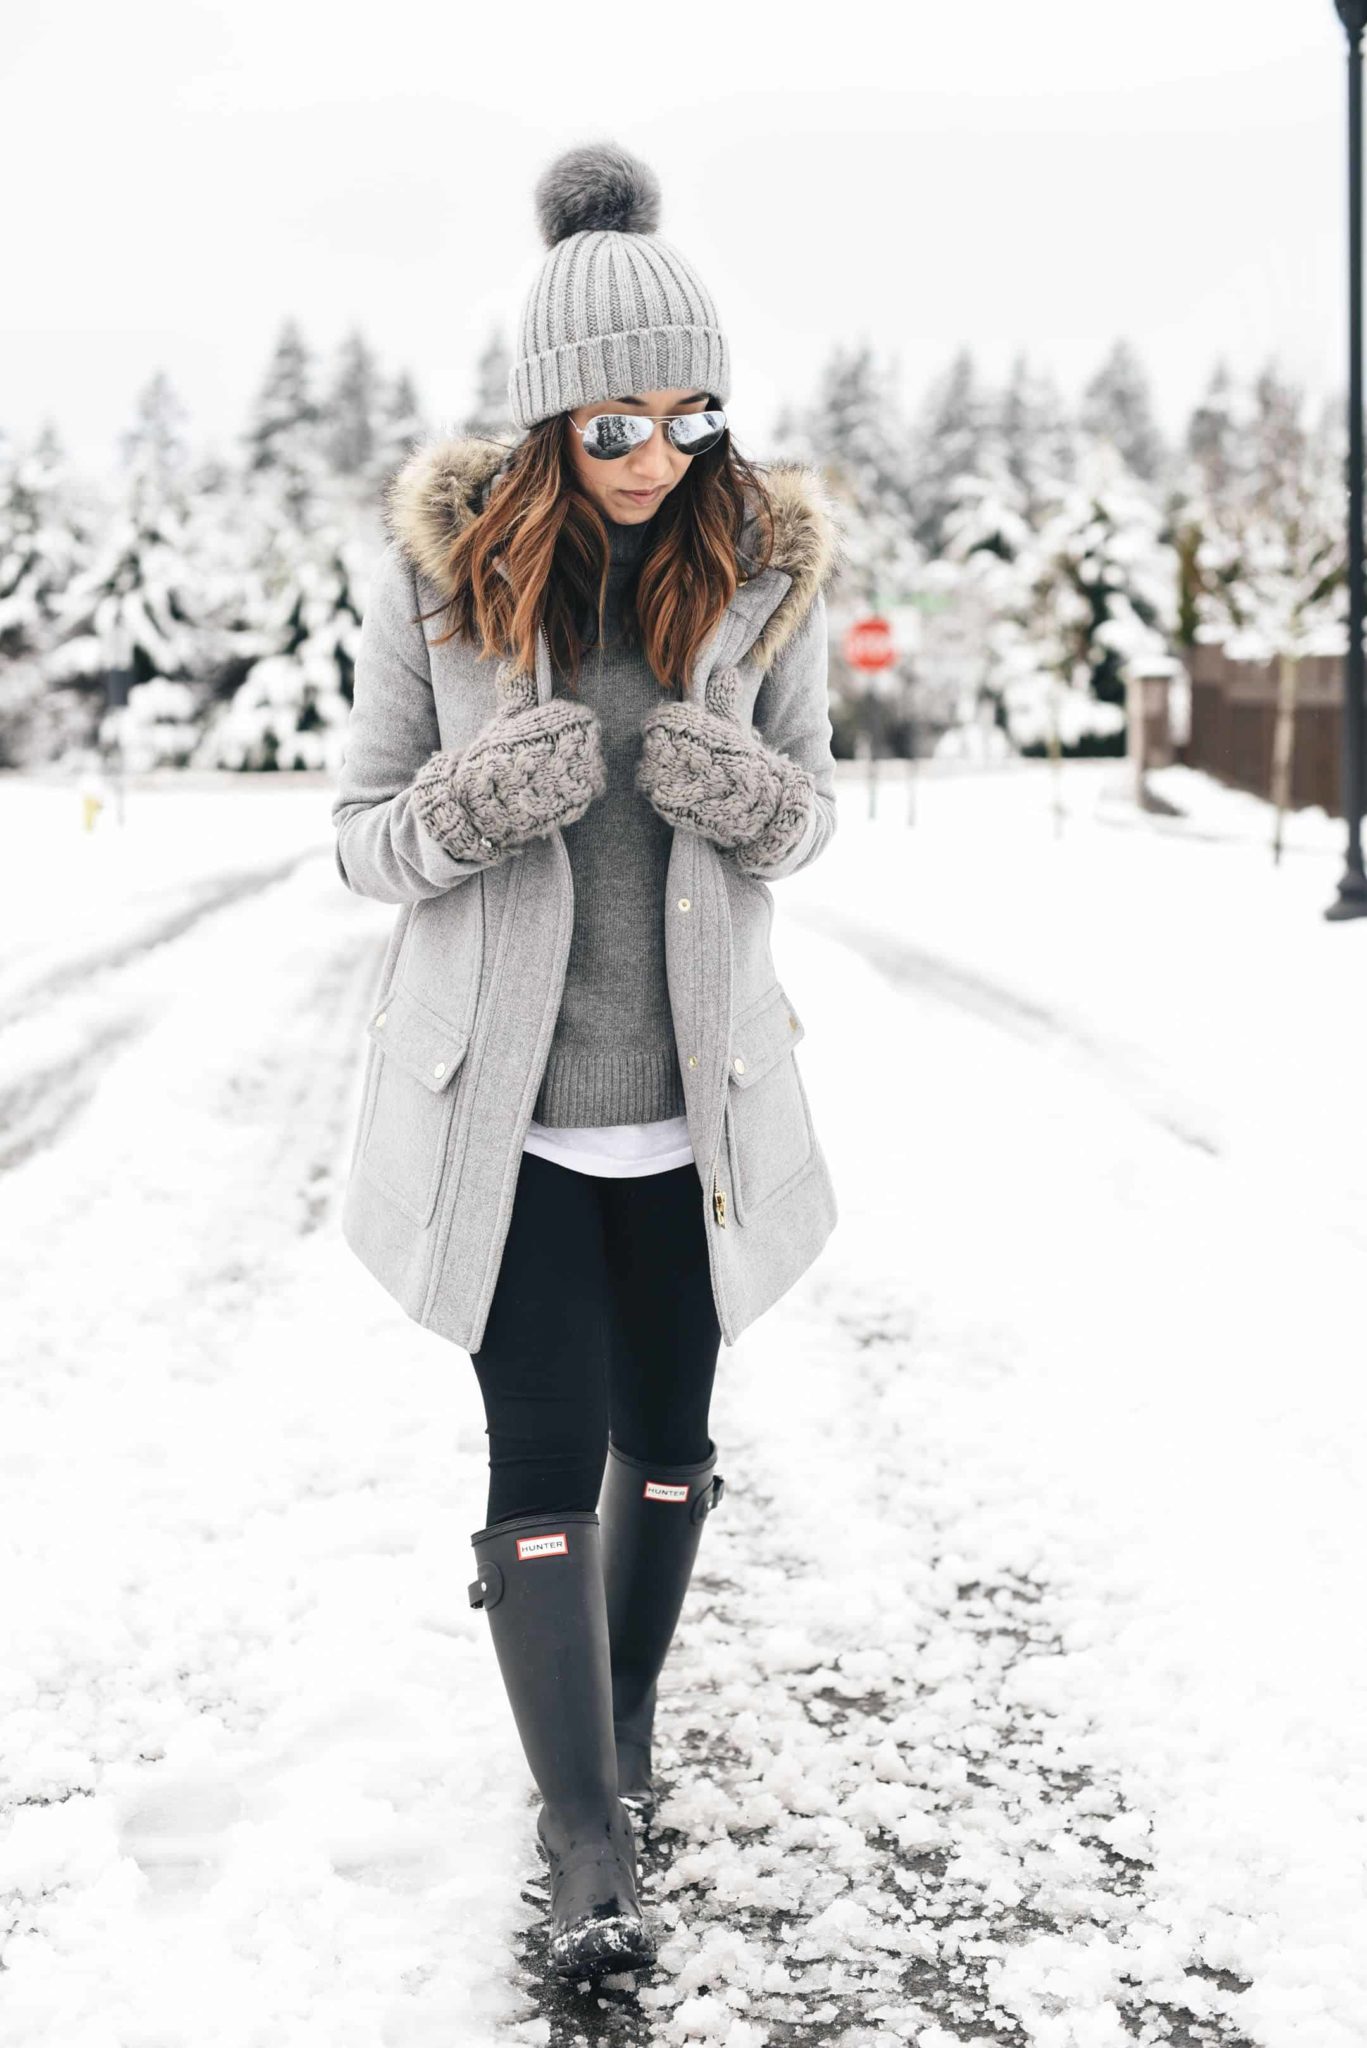 Winter snow clothes